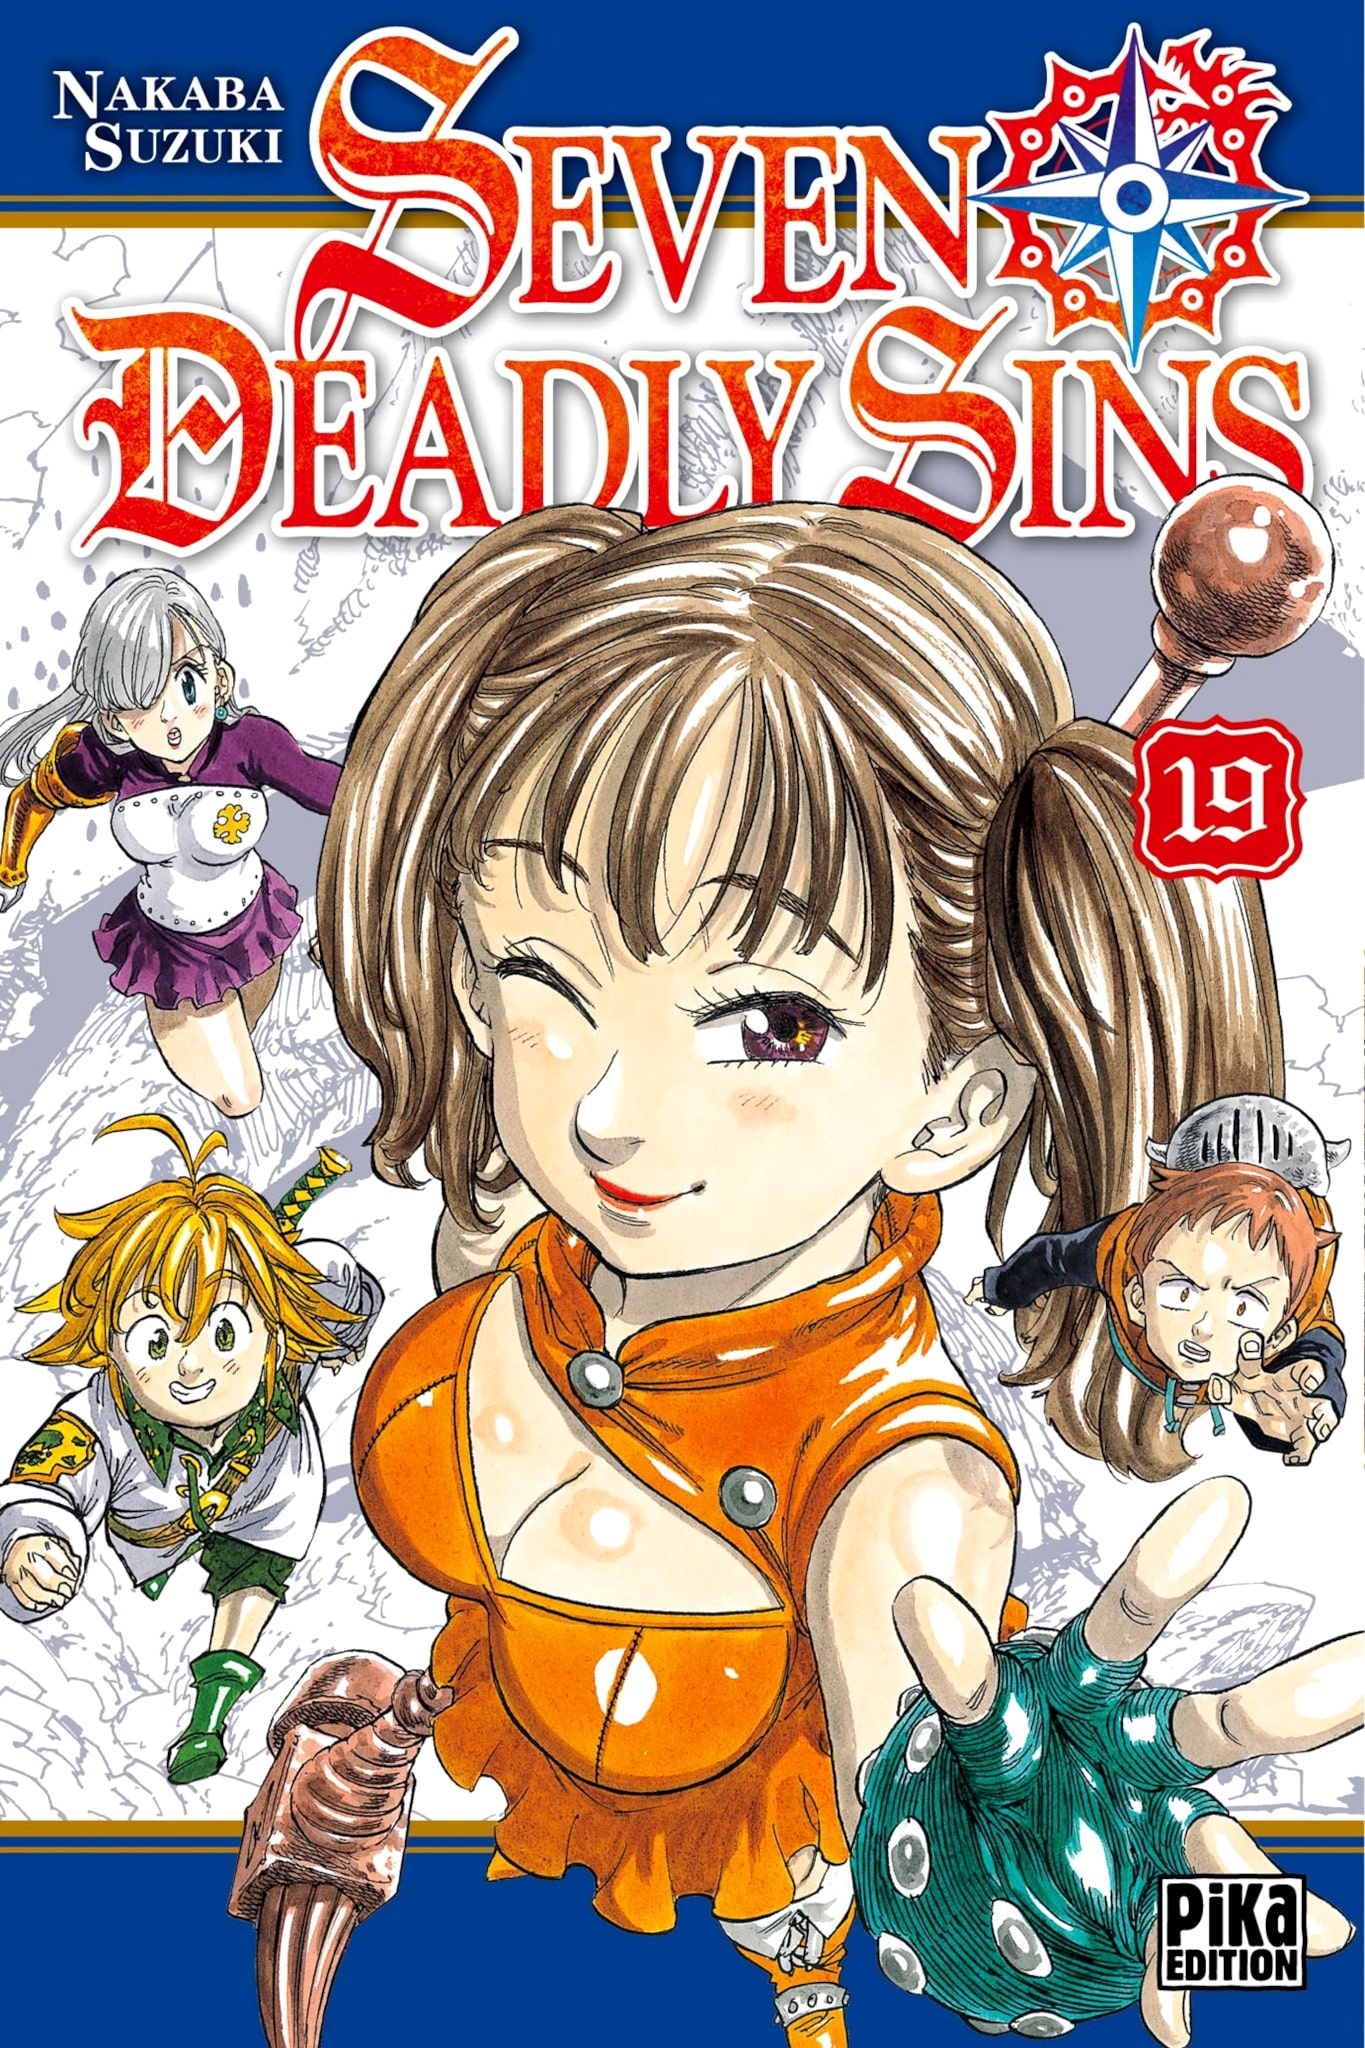 Tome 19 du manga The Seven Deadly Sins